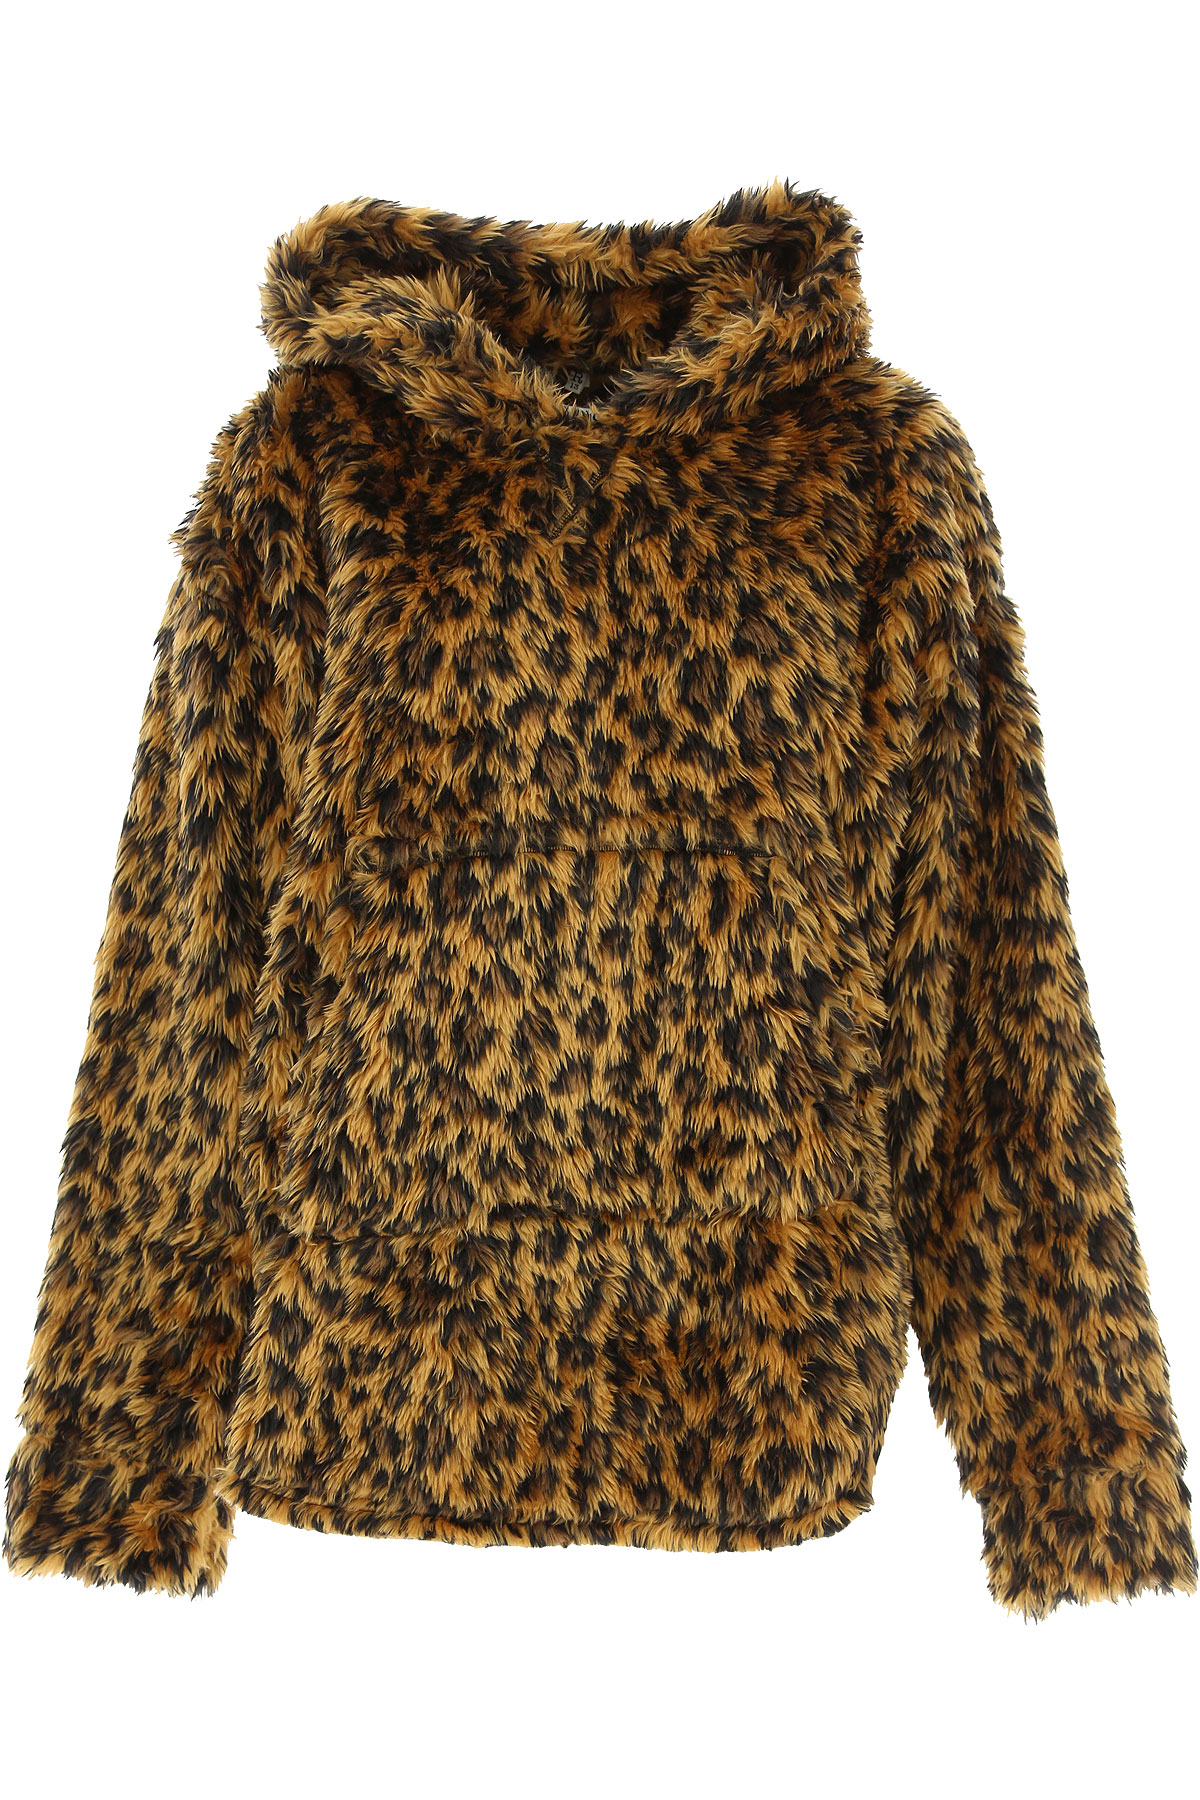 R13 Jacke für Damen Günstig im Sale, Leopardenfarbig, Acryl, 2017, 44 M